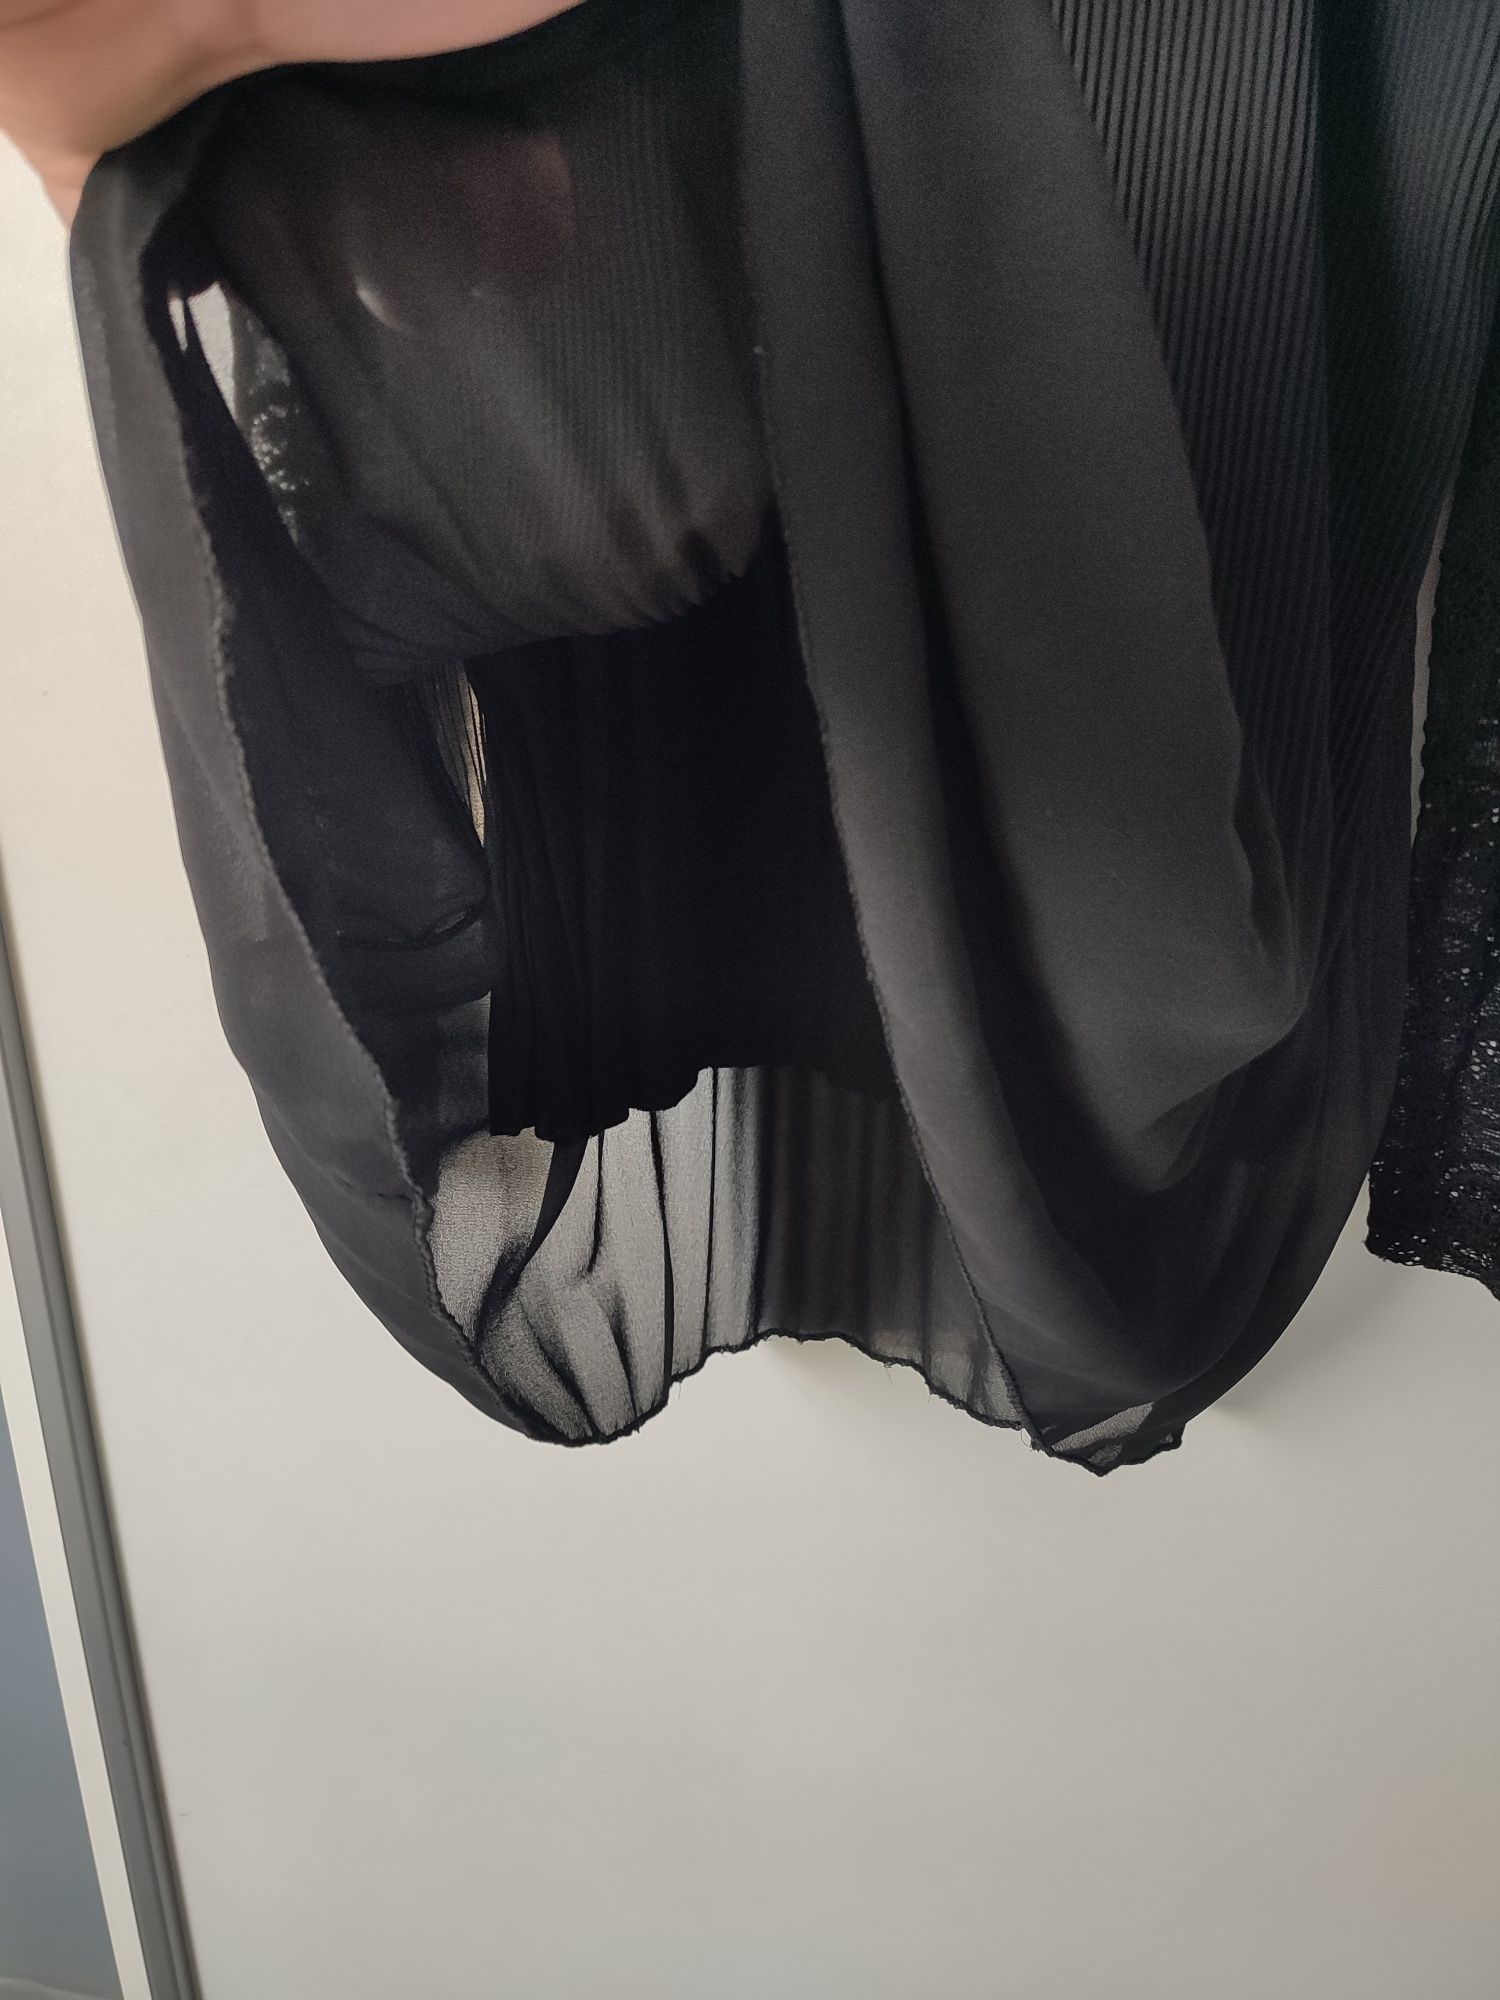 Bluzka 38 M elegancka damska plisowana czarna kokardą falbana baskinka